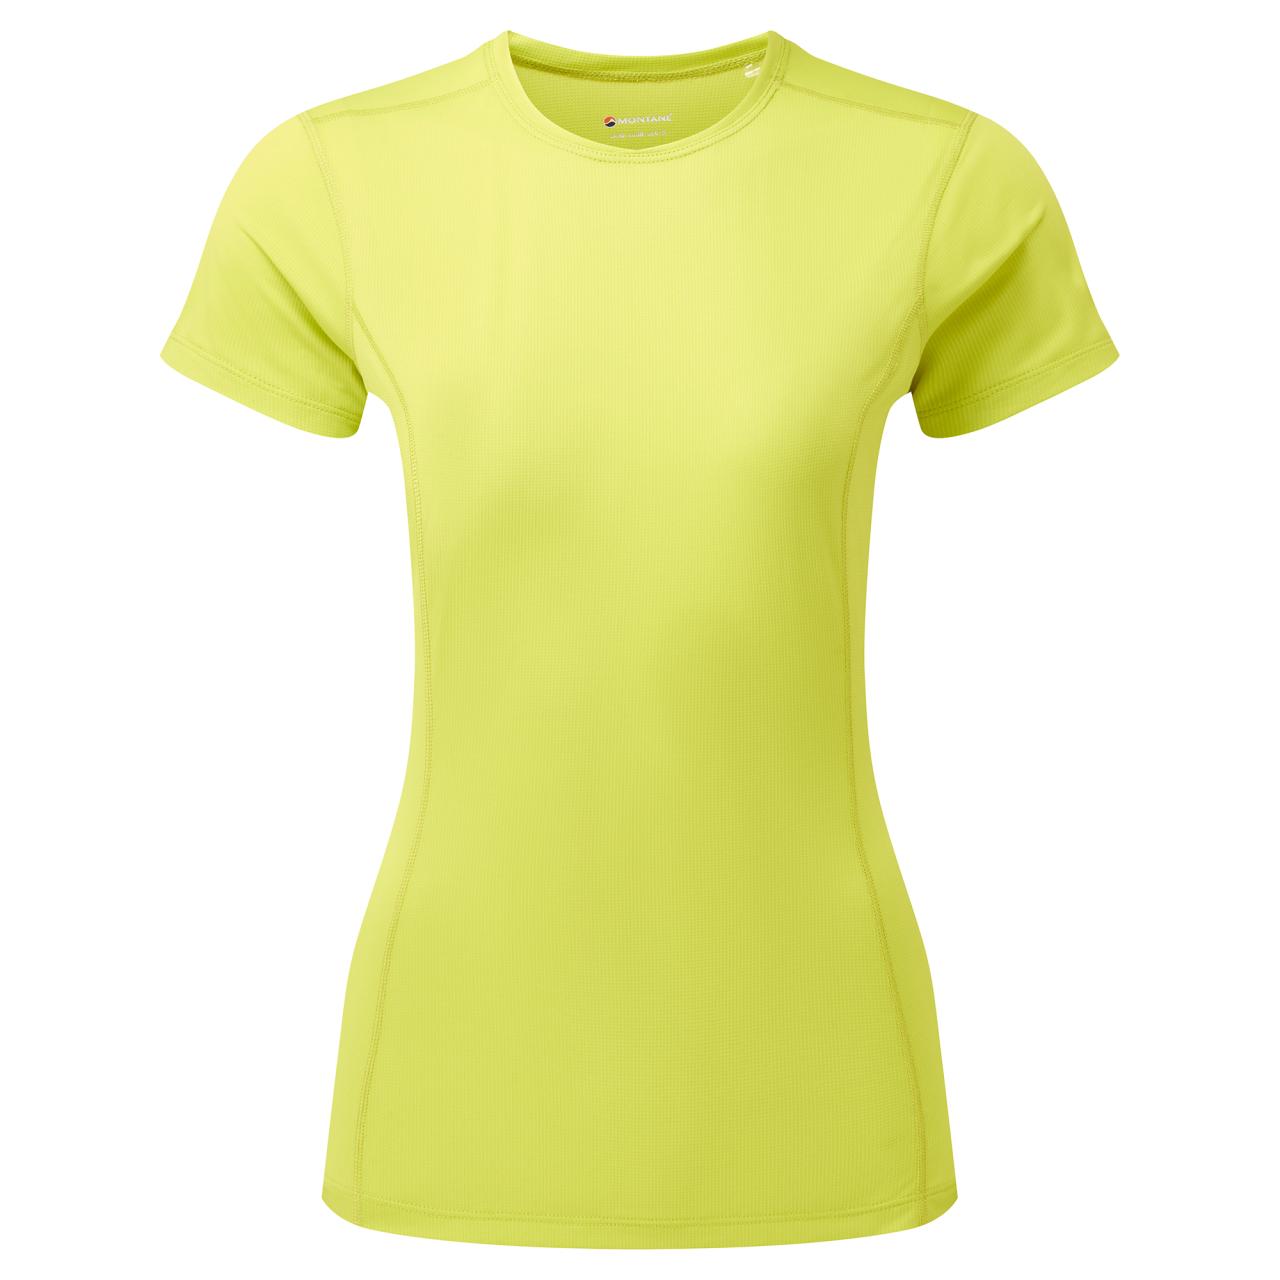 FEM DART LITE T-SHIRT-CITRUS SPRING-UK8/XS dámské triko žlutozelené